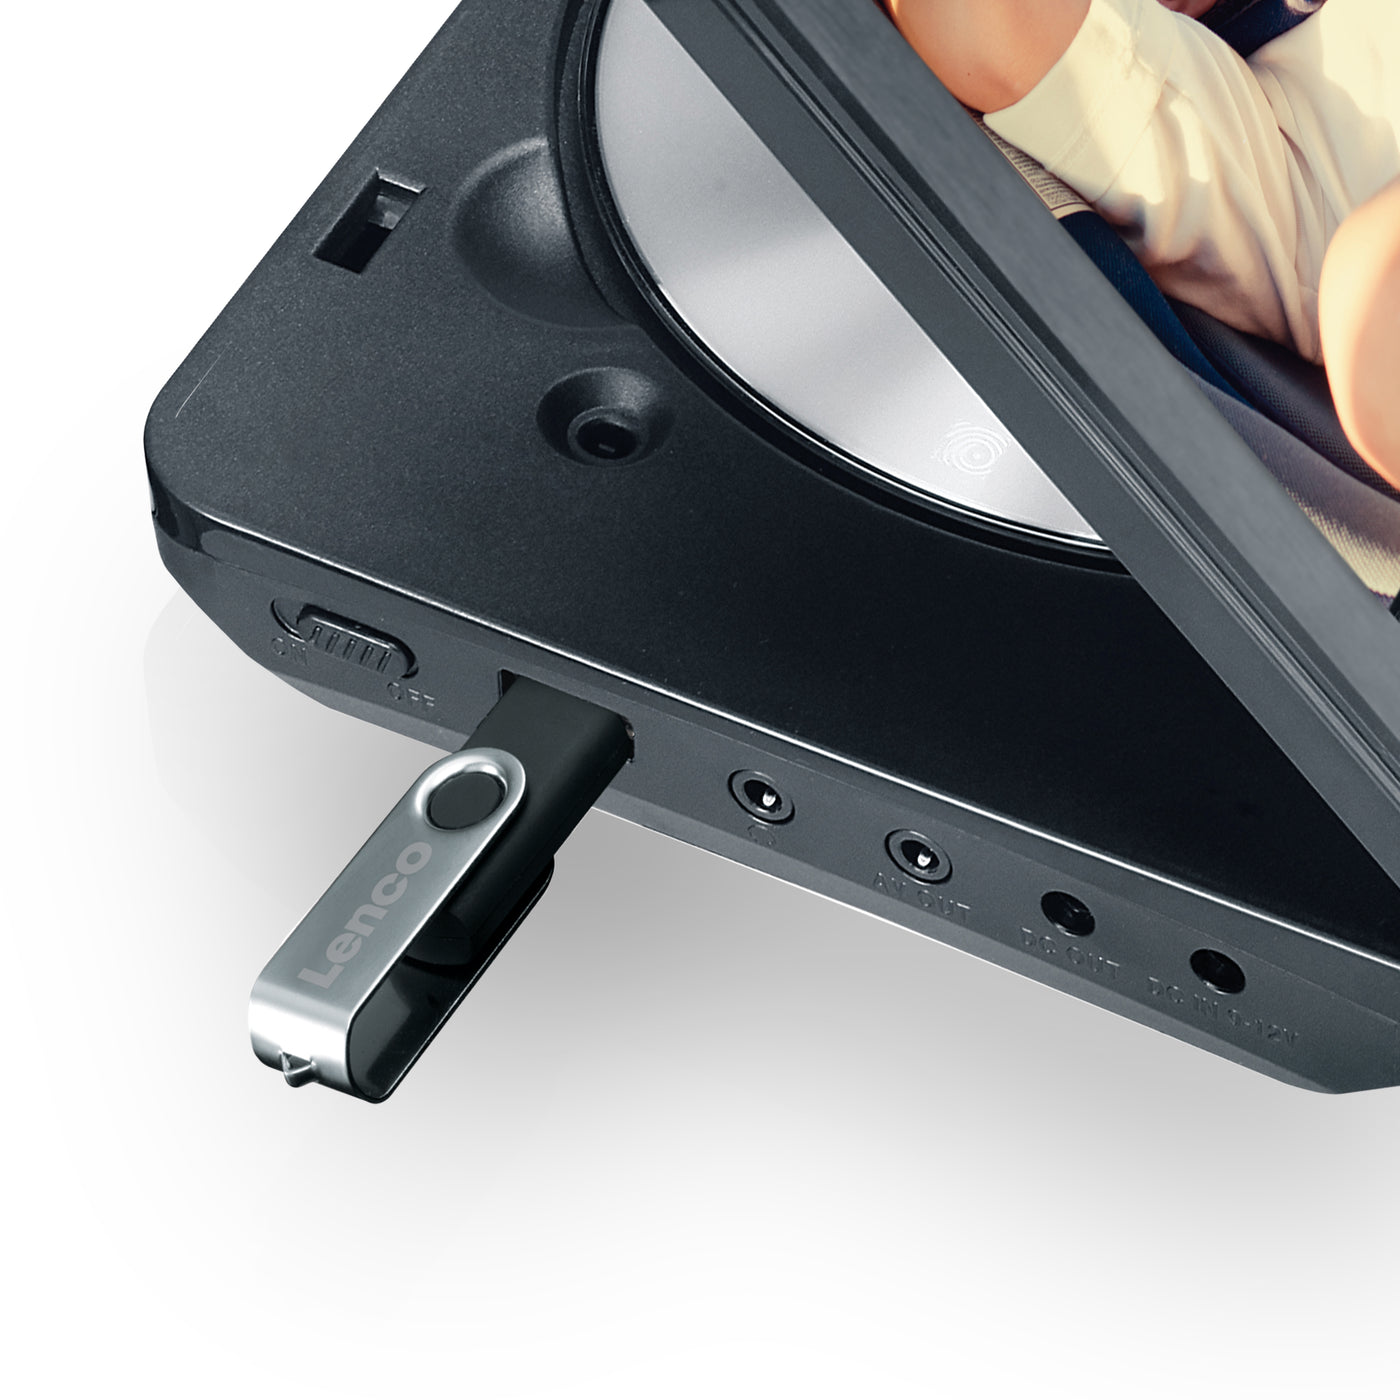 LENCO MES-212 - 7" Double display portable DVD player wth USB - Black